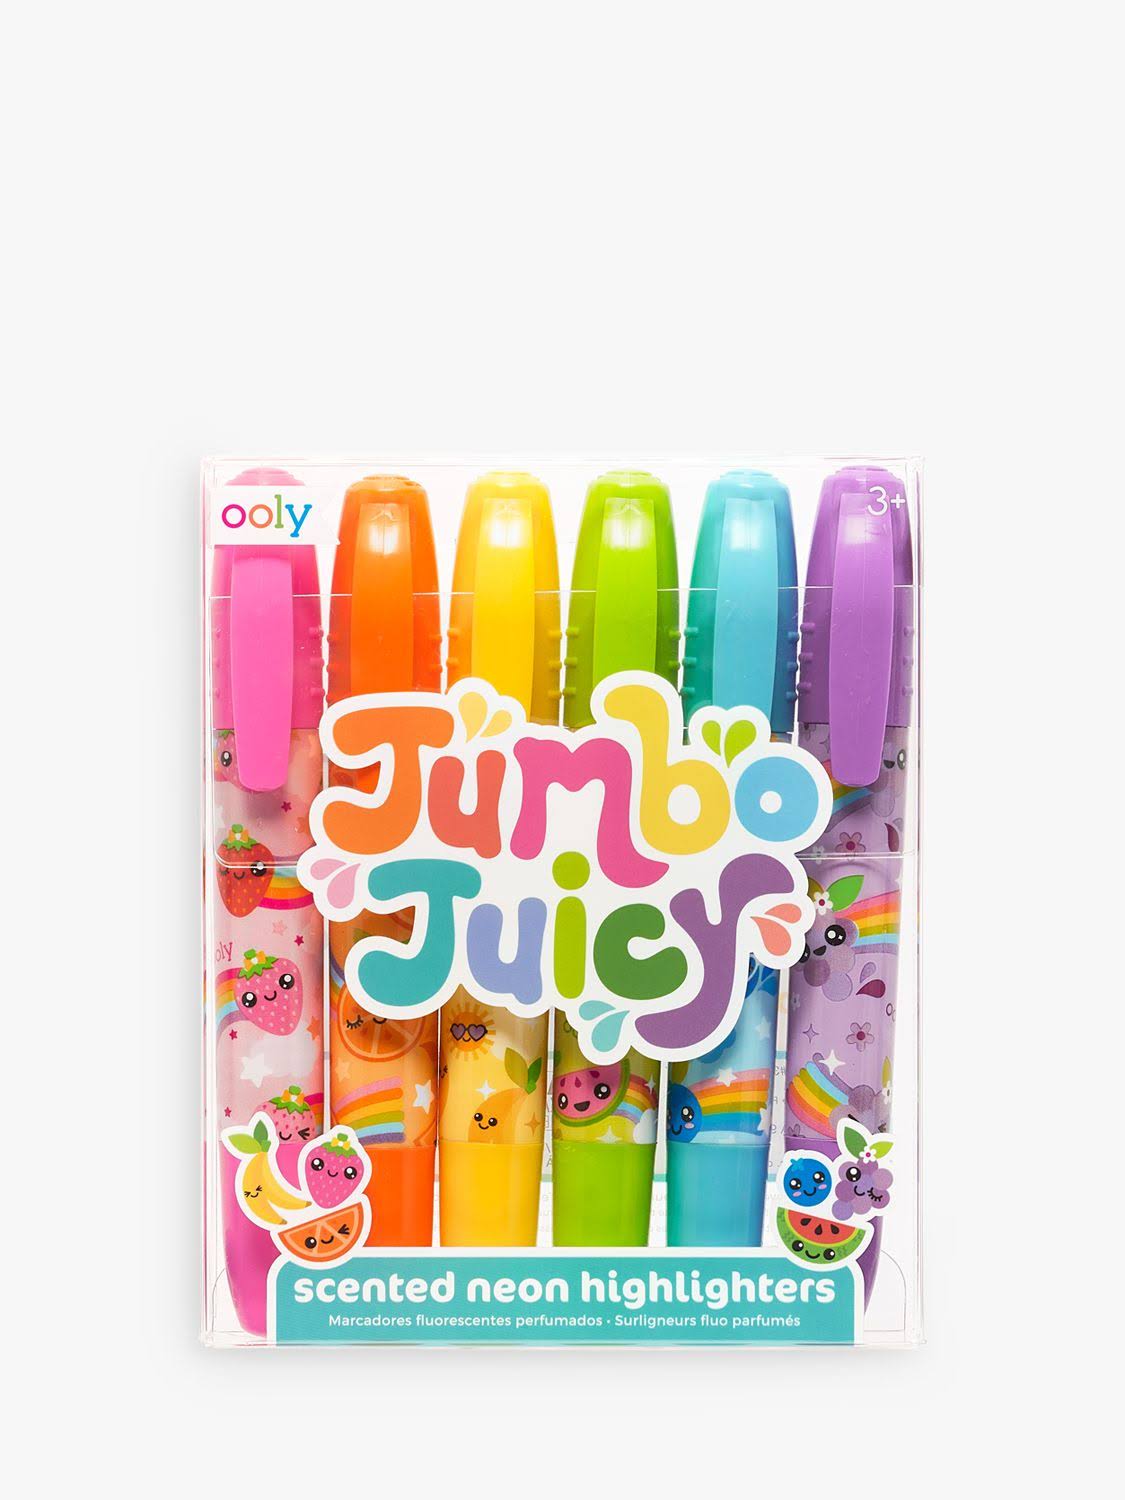 Ooly Jumbo Juicy Scented Neon Highlighters - Set of 6